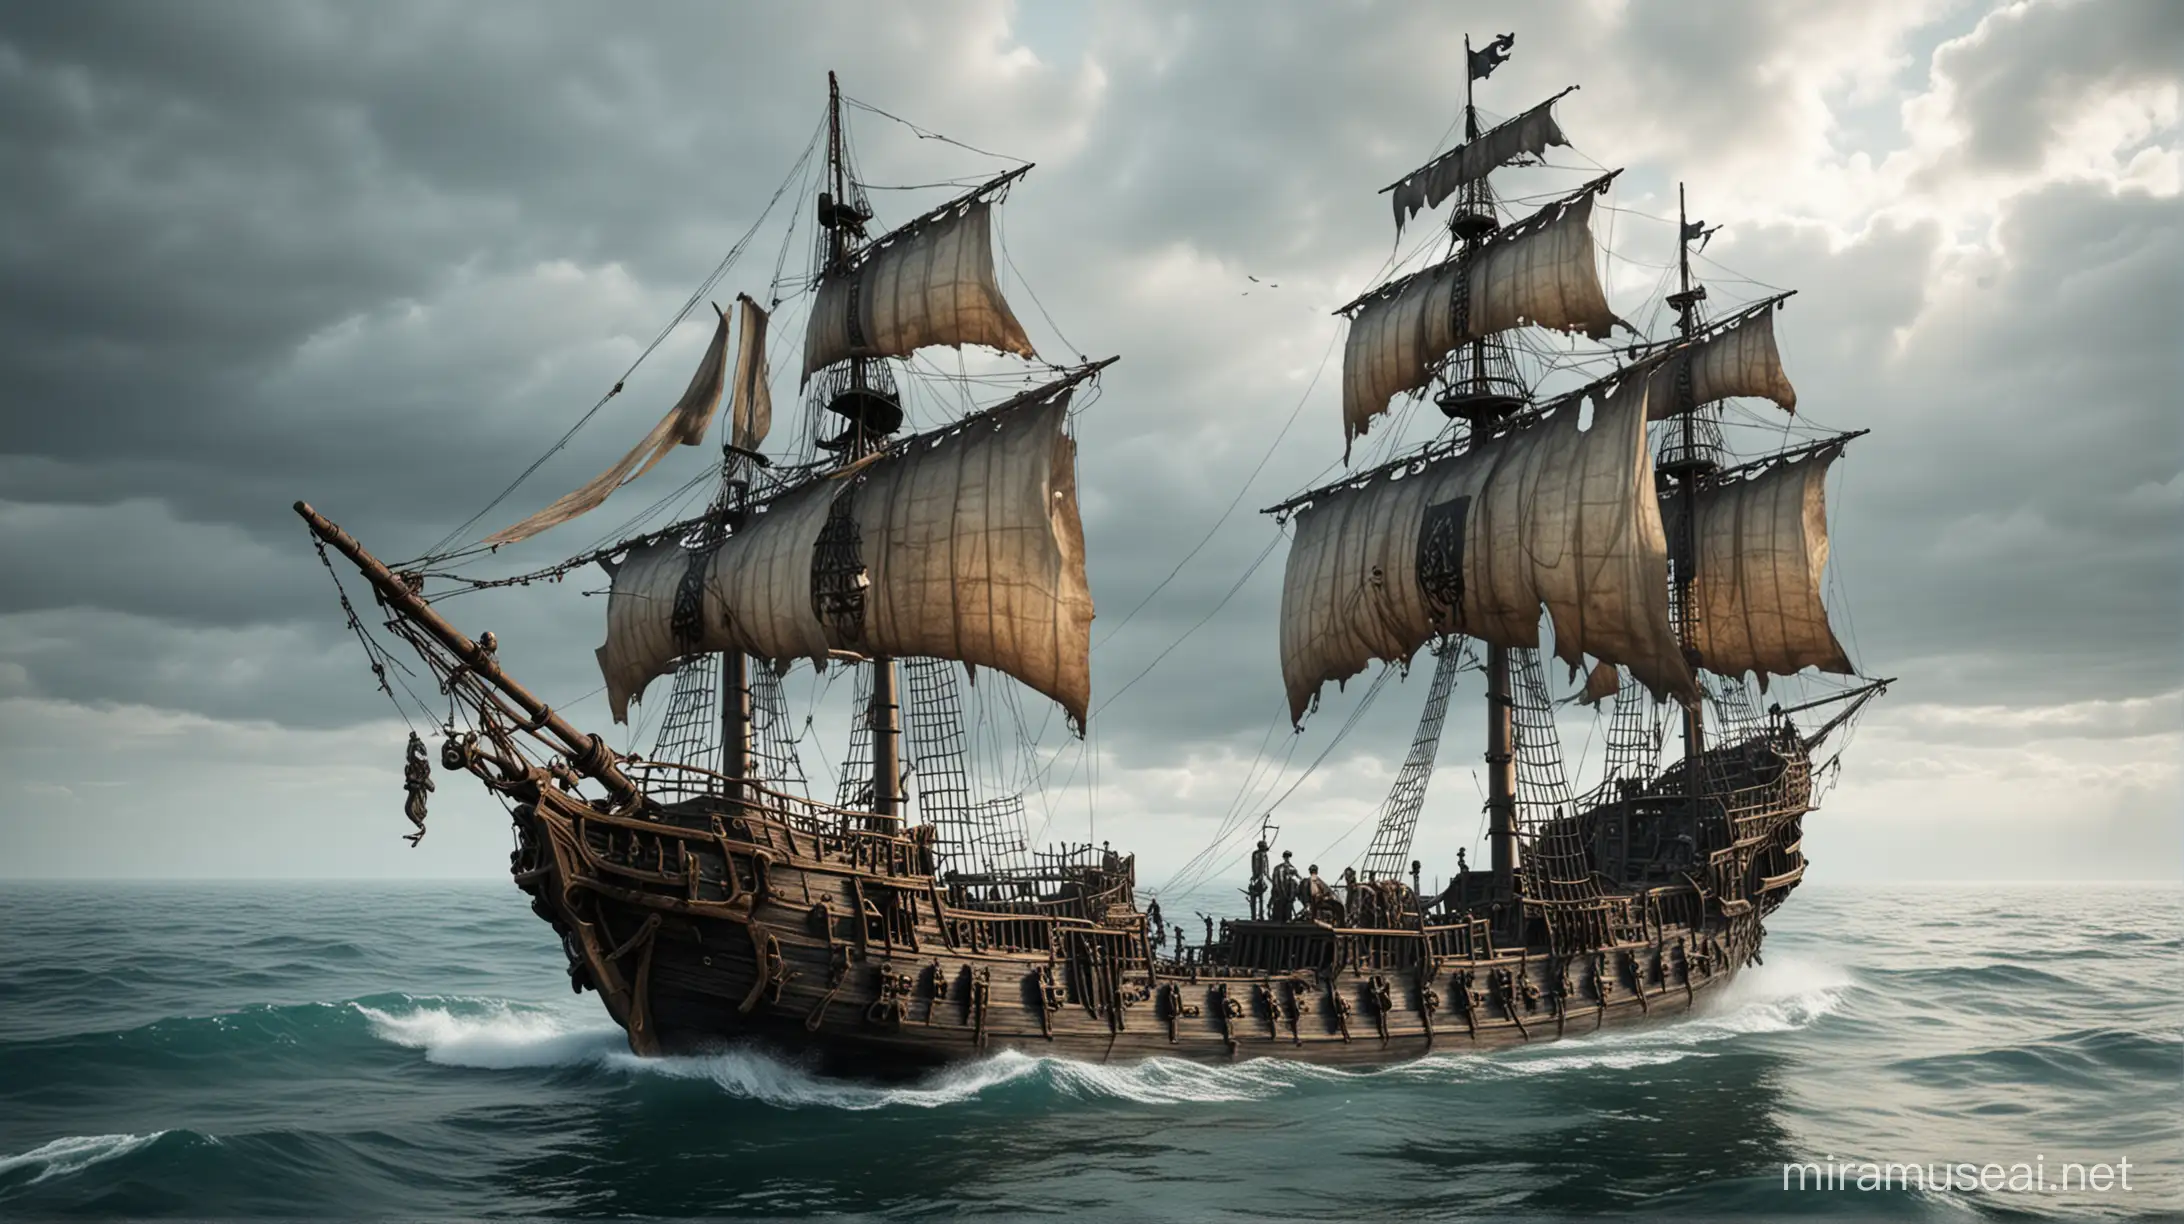 Realistic Skeleton Pirate Ship Sailing on the Sea